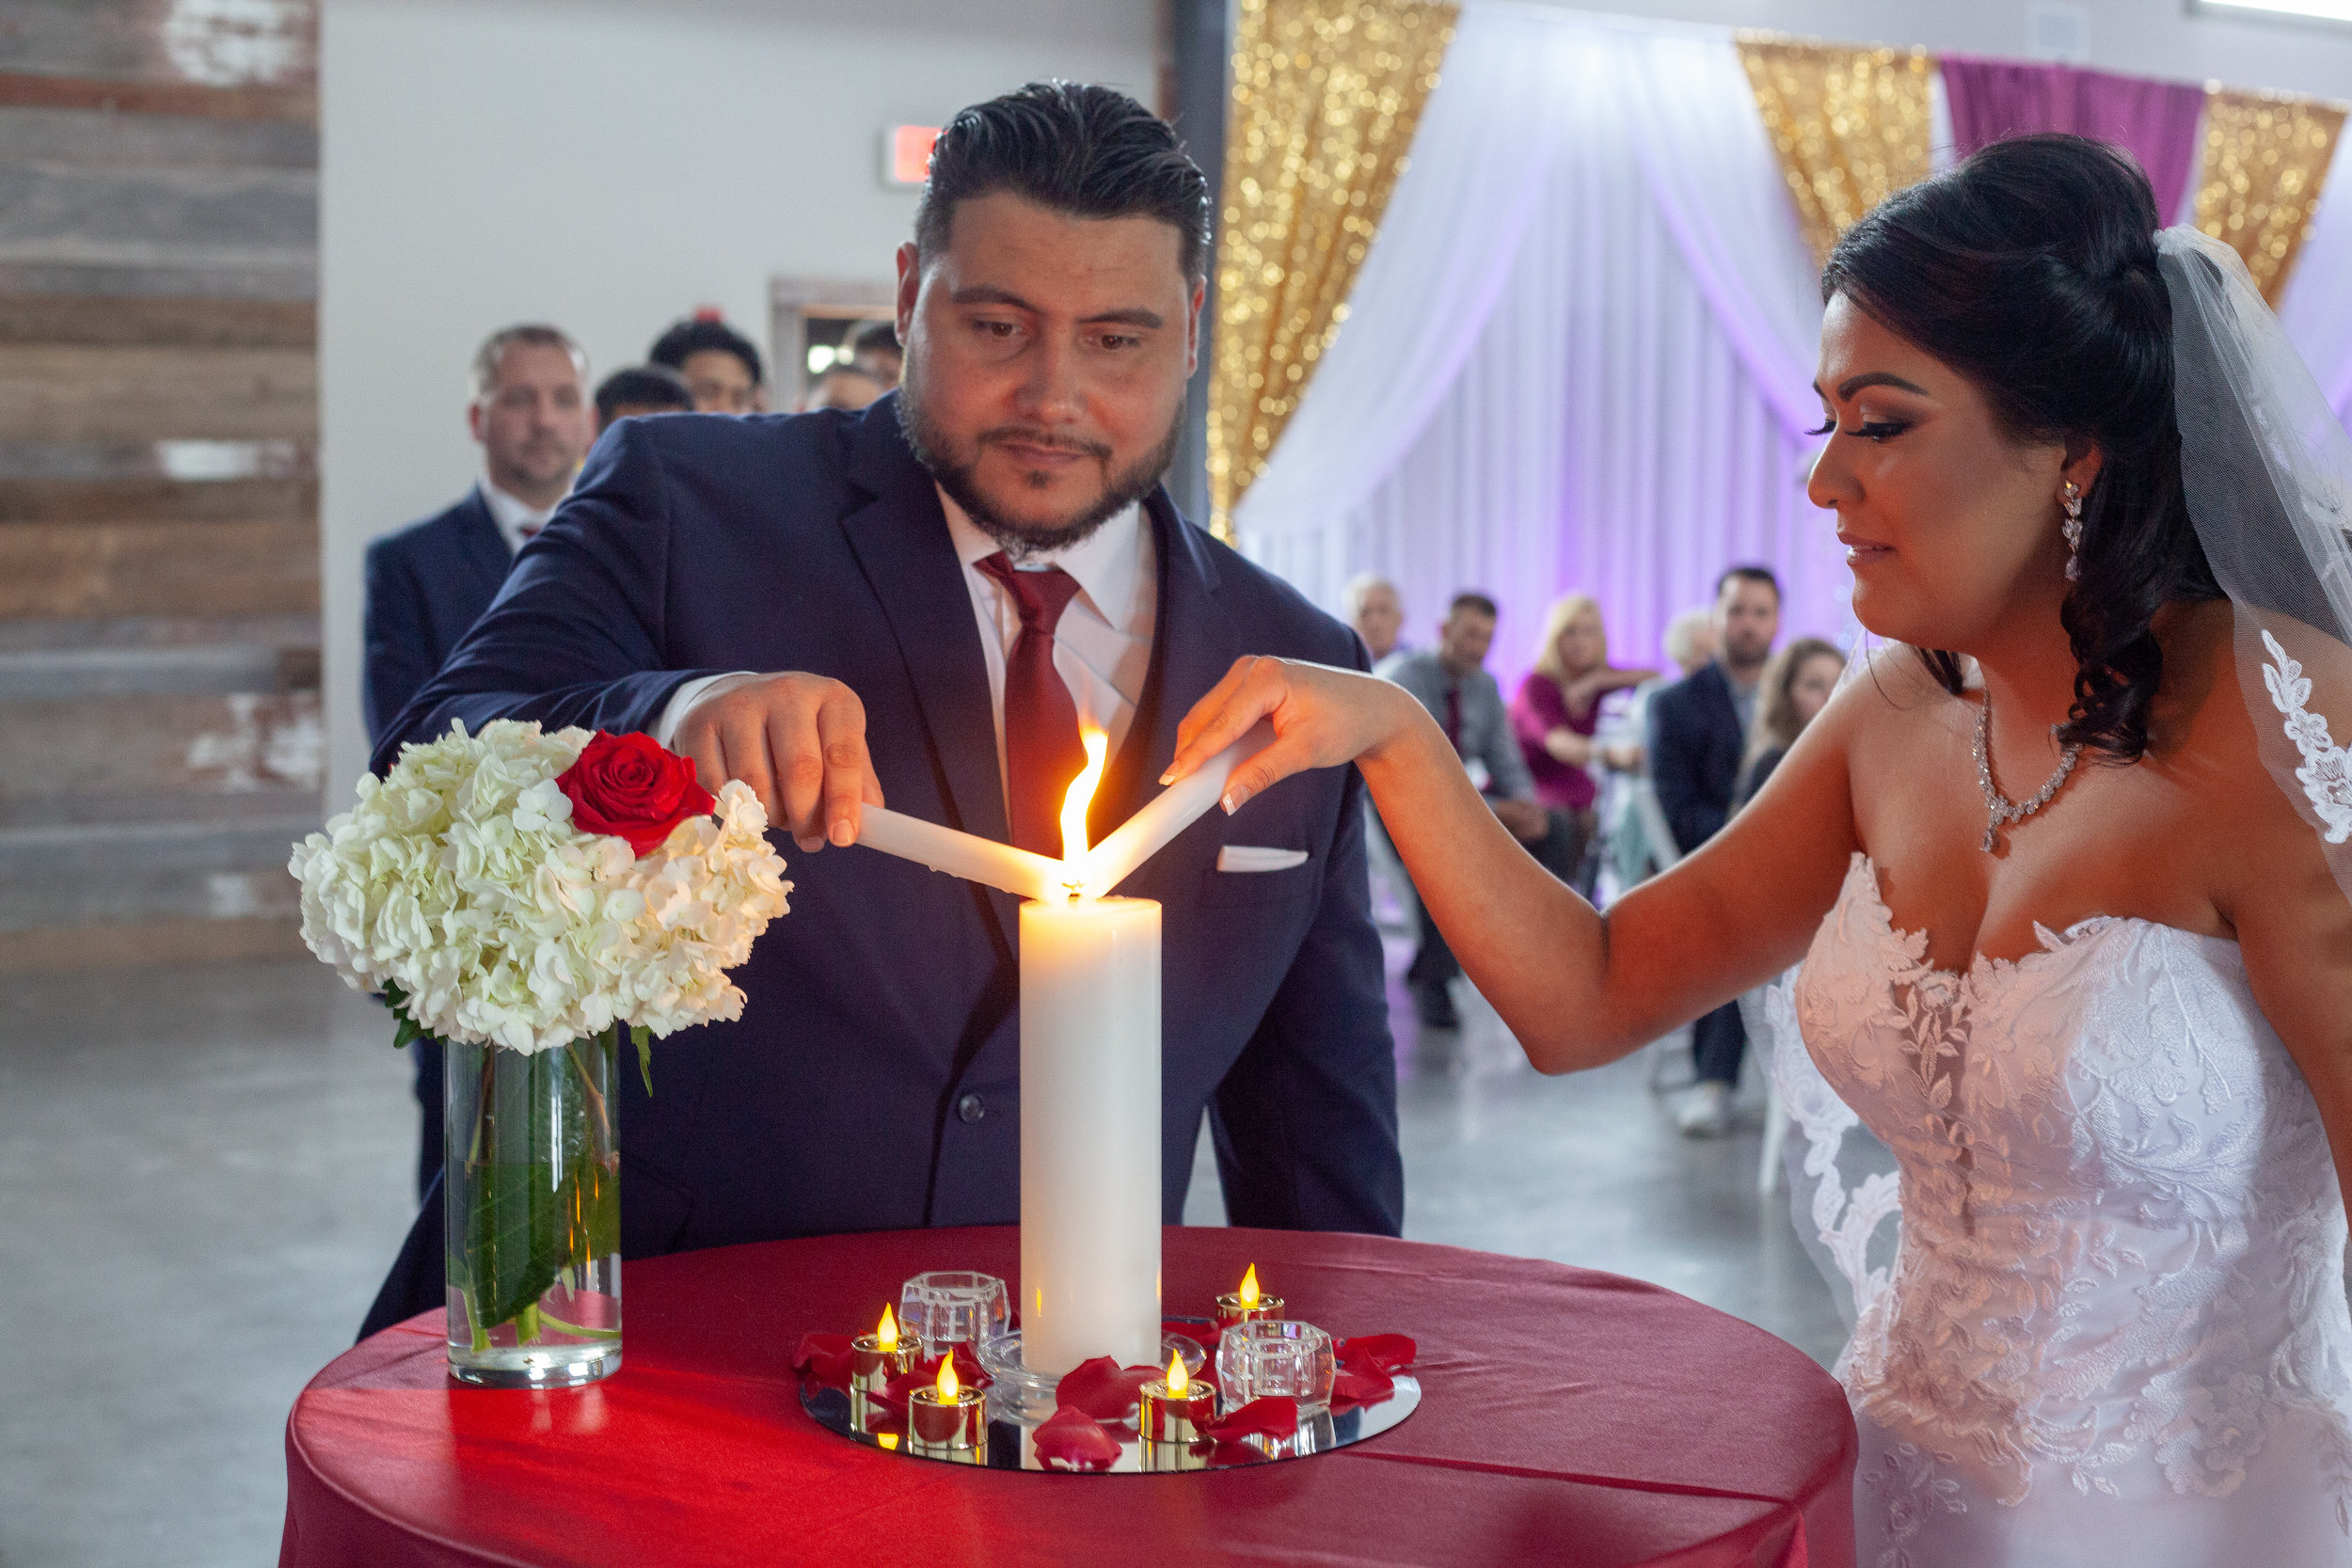 lighting of the candle samoan wedding mexican culture wedding .jpg